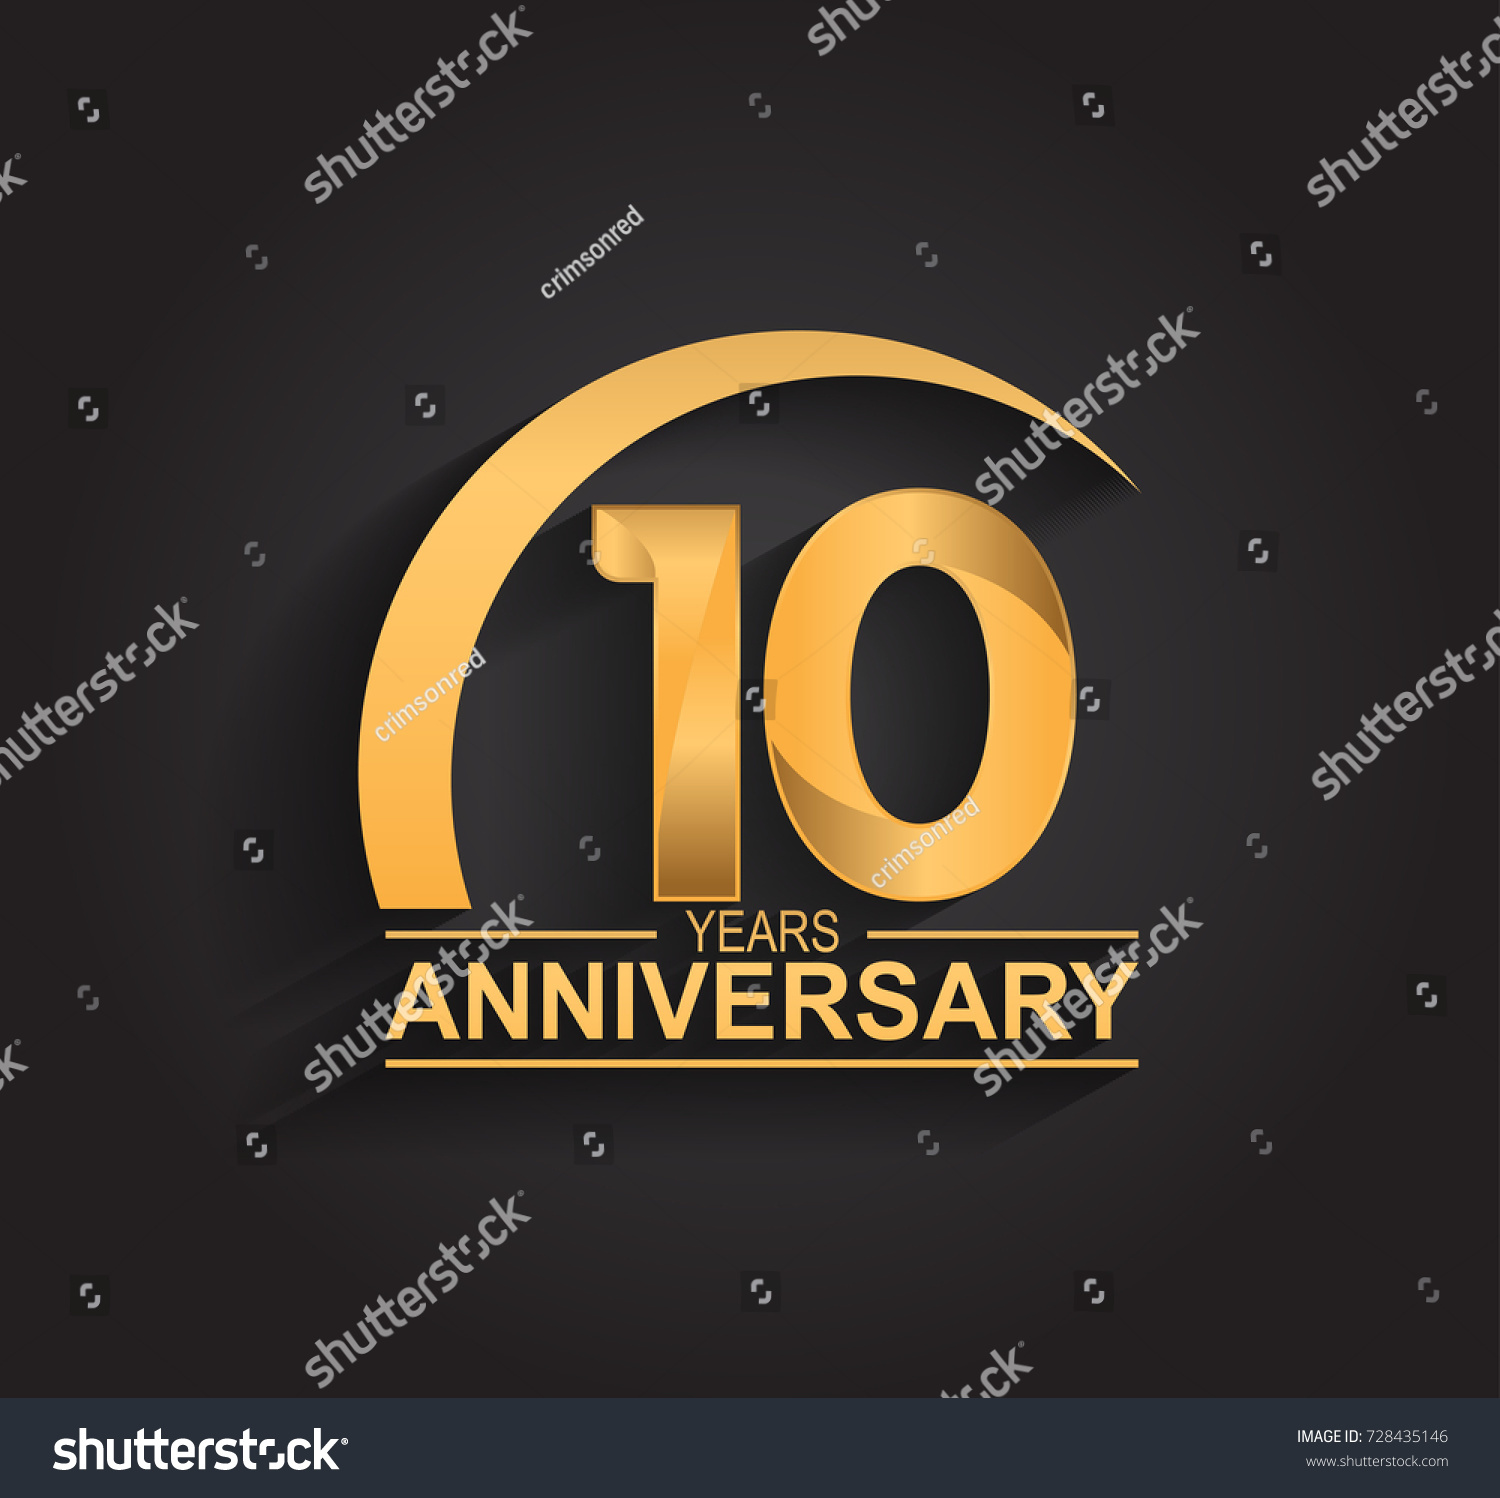 10 Years Anniversary Celebration Anniversary Logo Stock Vector Royalty Free 728435146